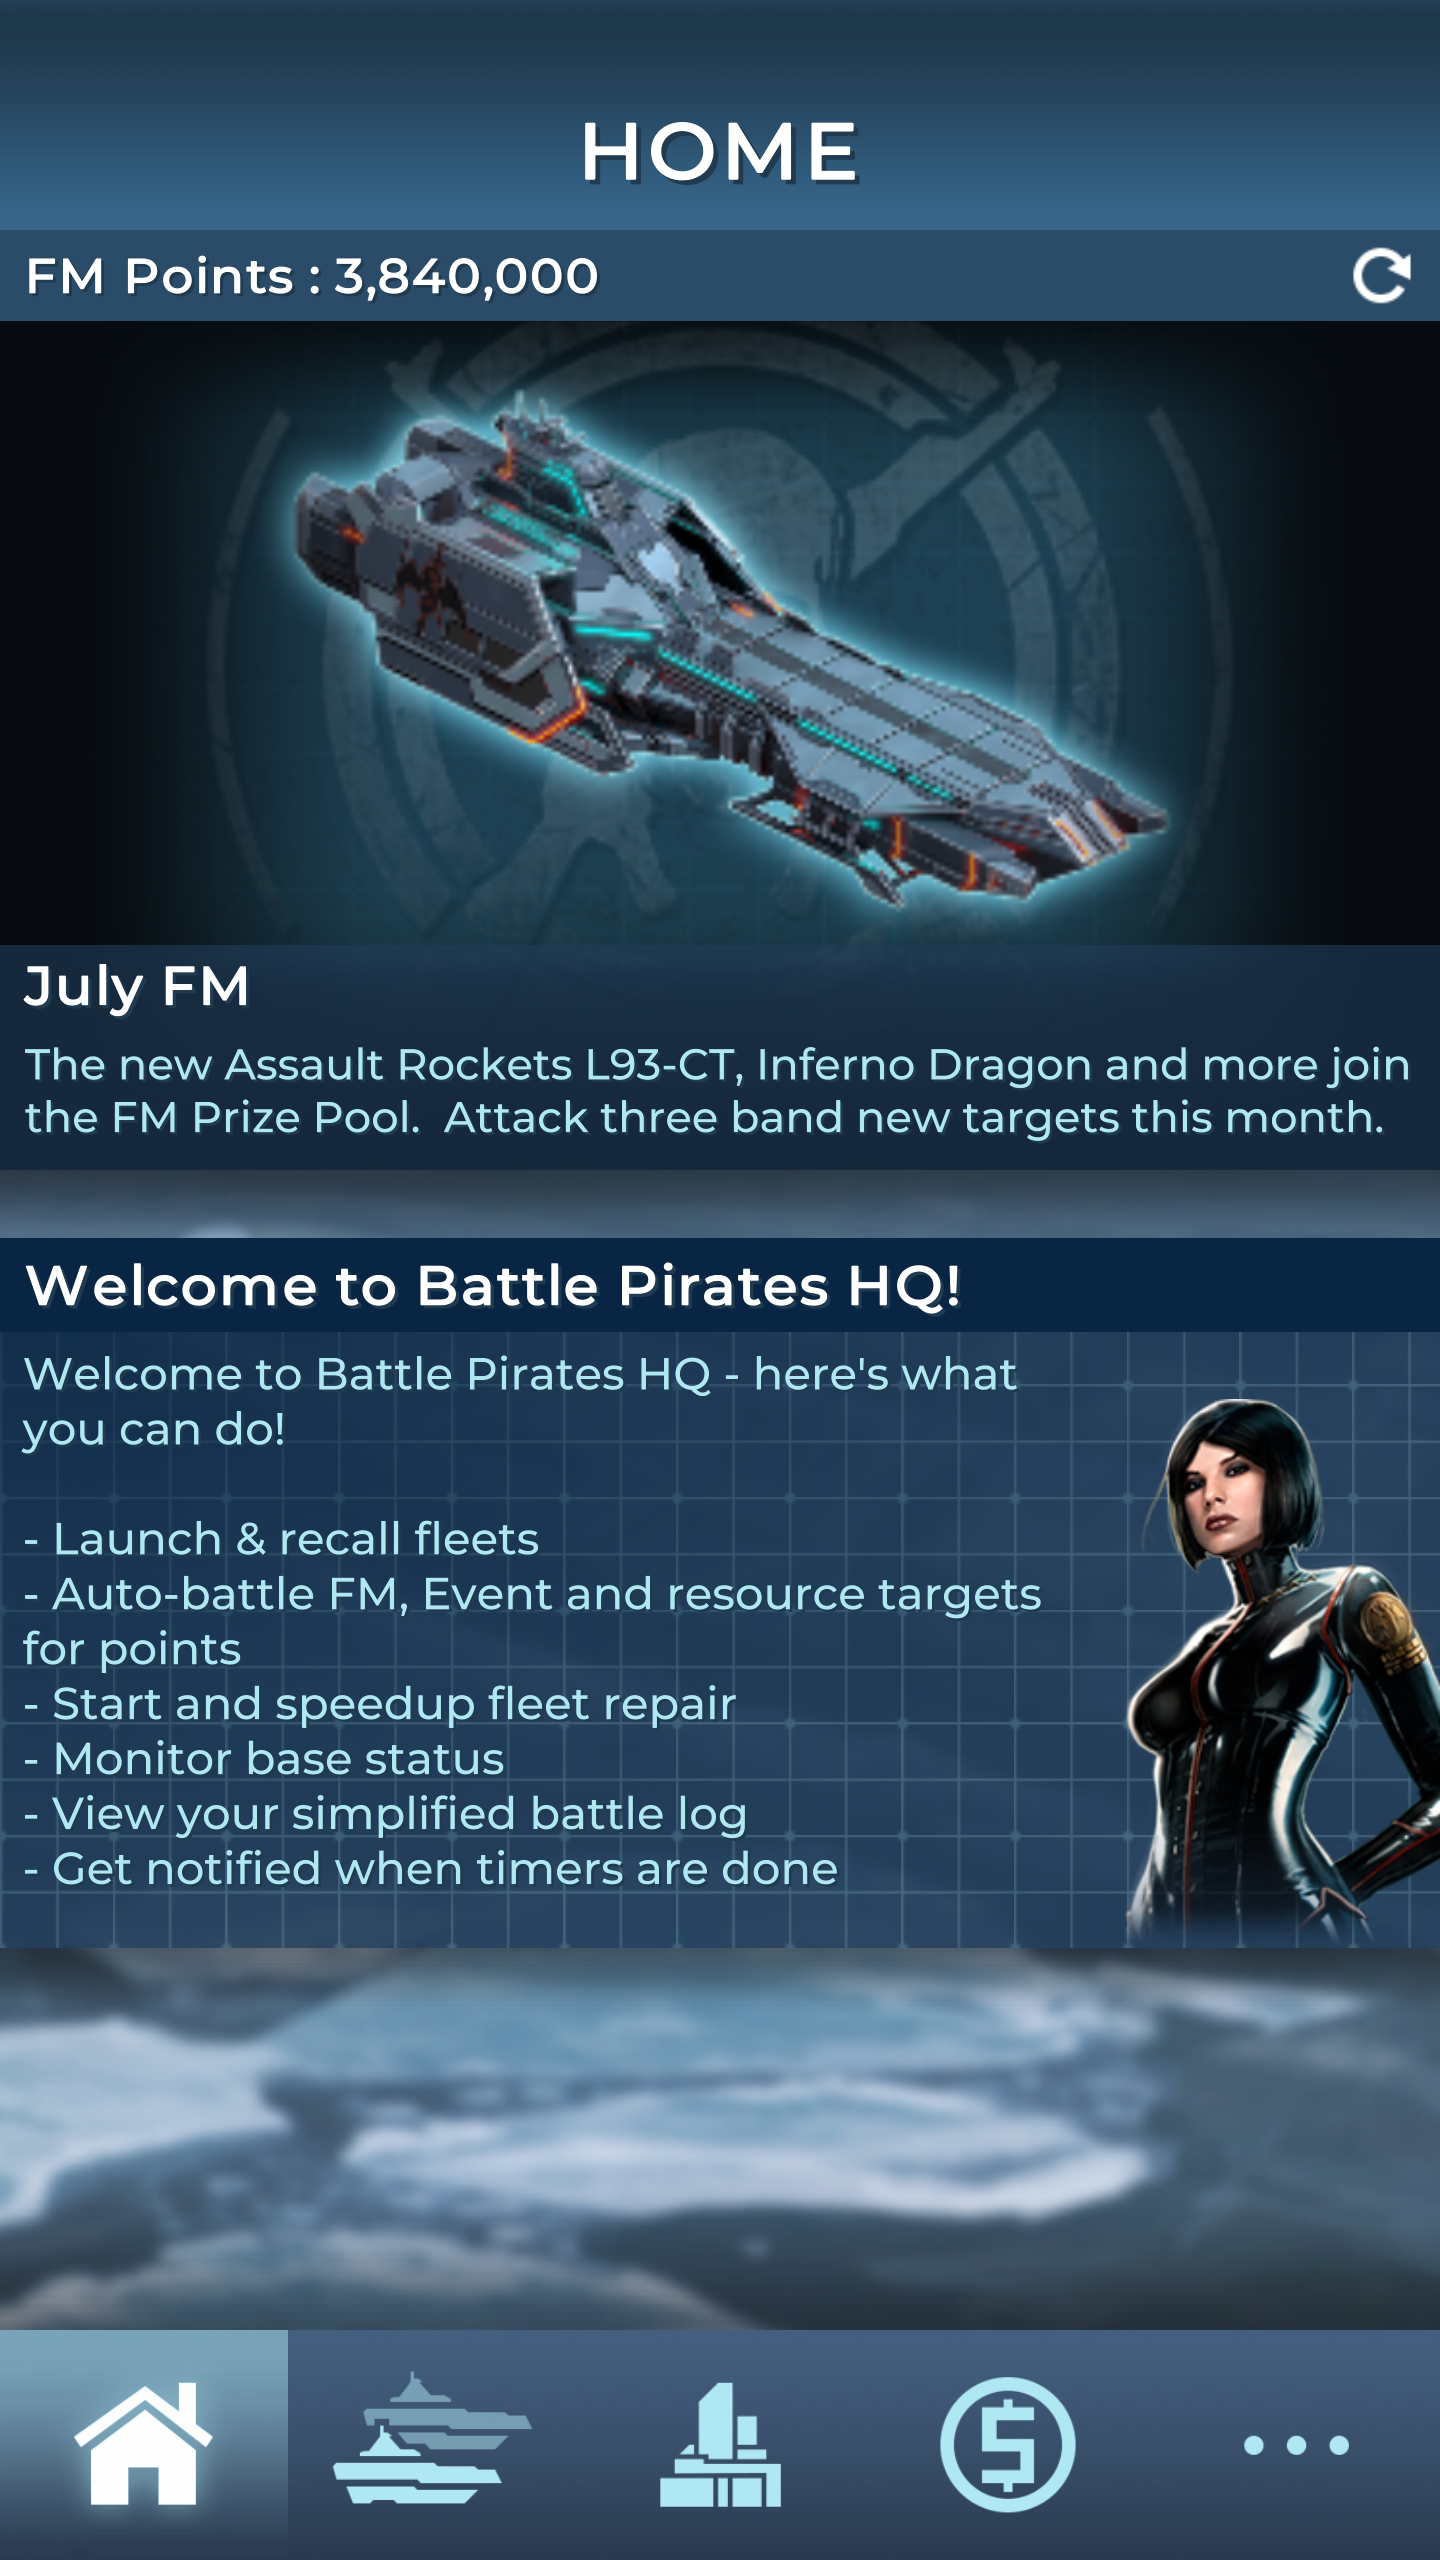 Battles Pirates: HQのキャプチャ